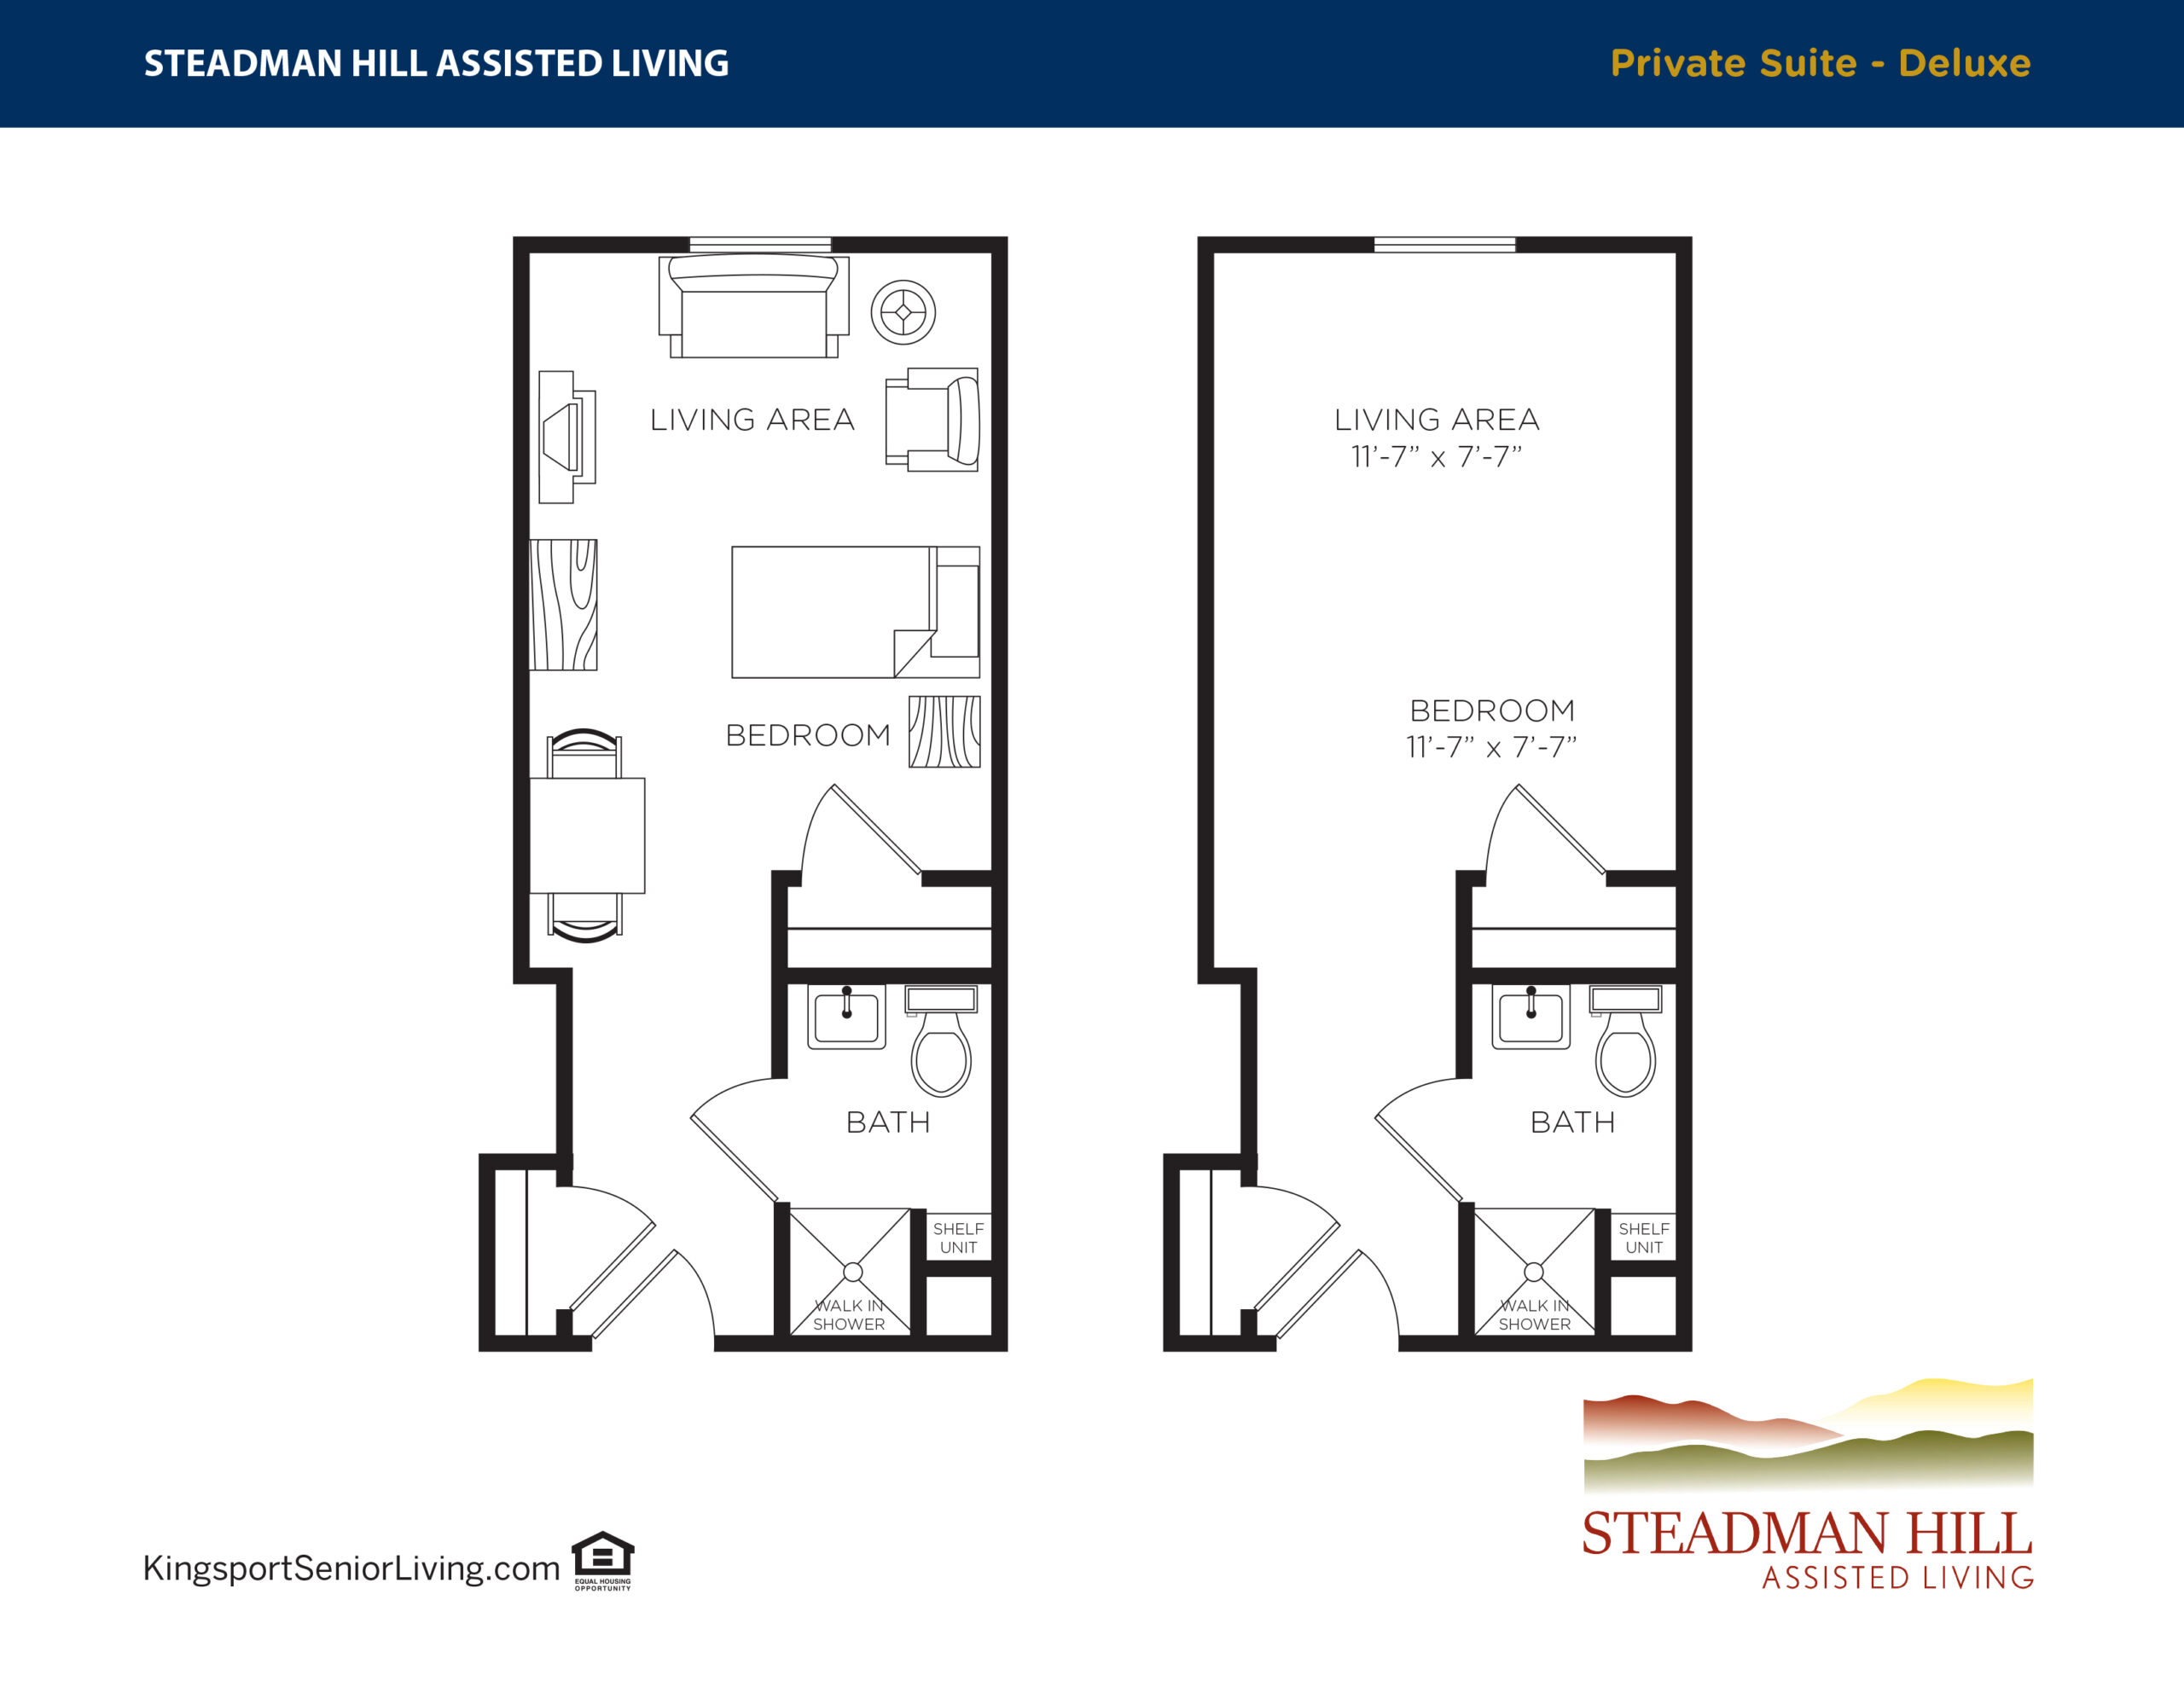 Steadman Hill Floorplan Private Deluxe